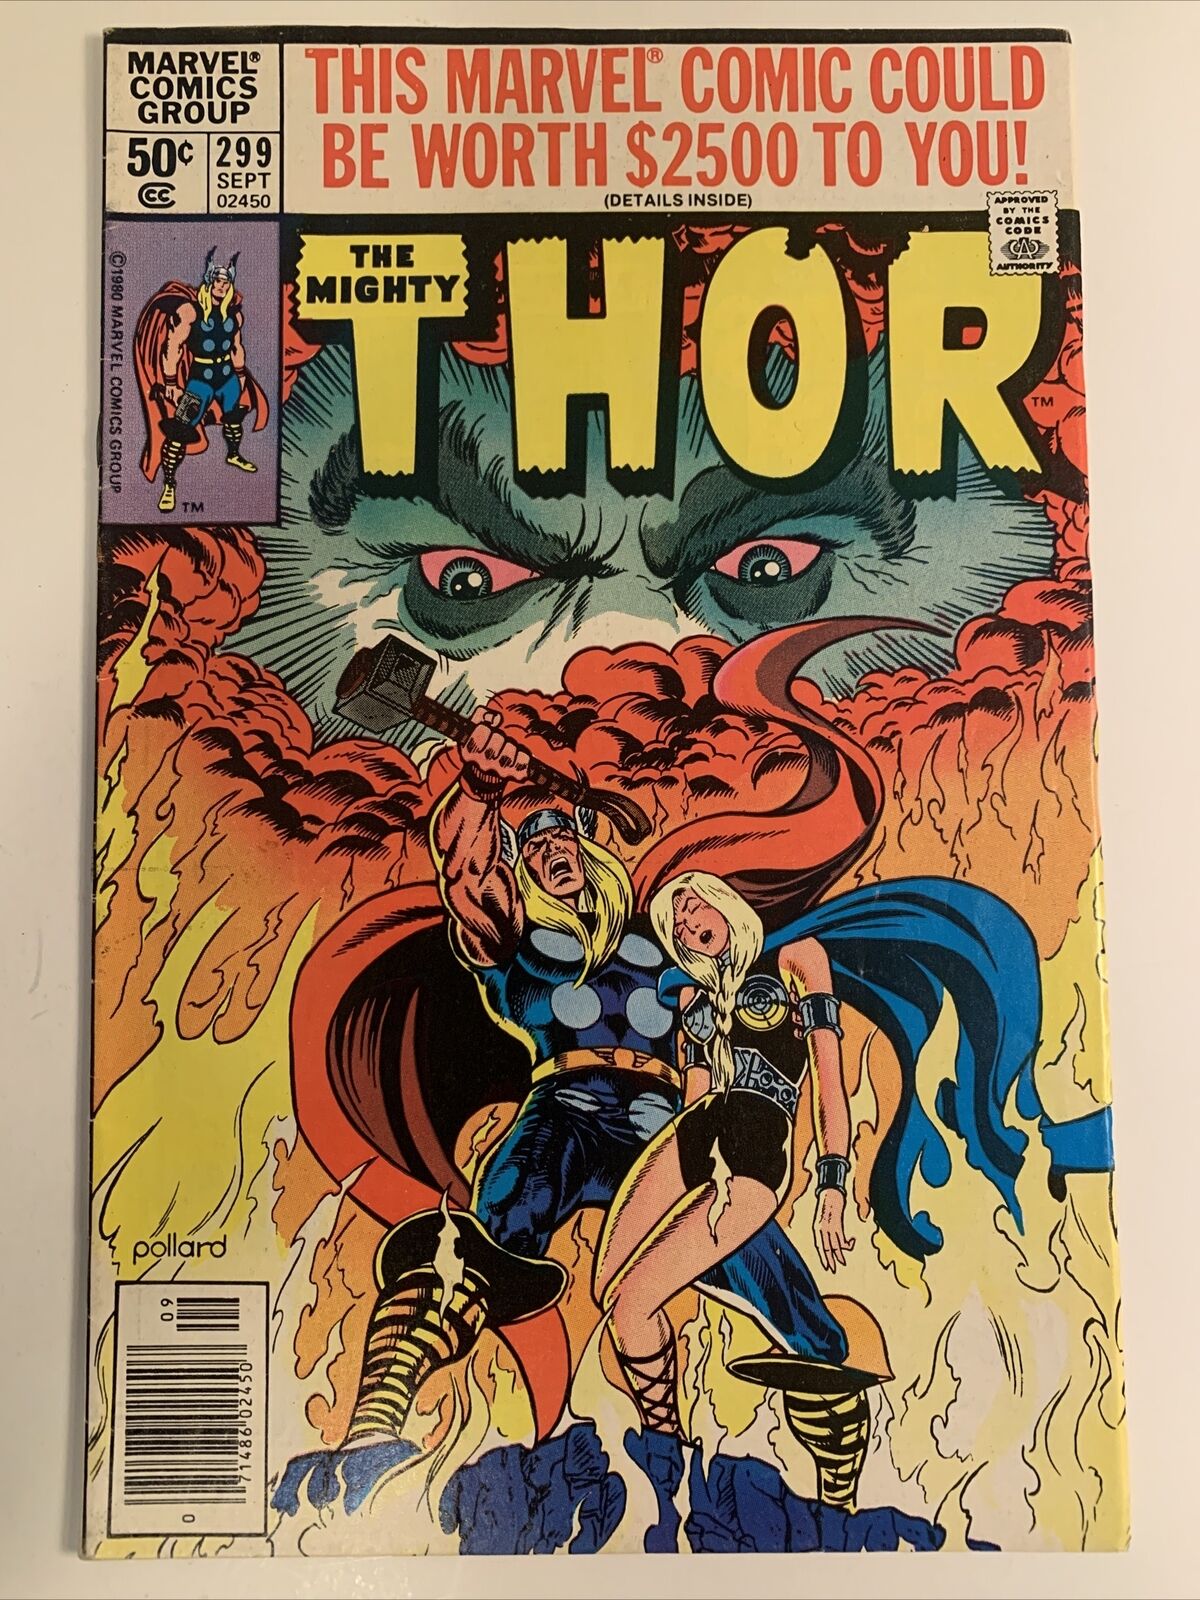 The Mighty Thor #299 - Marvel Comics